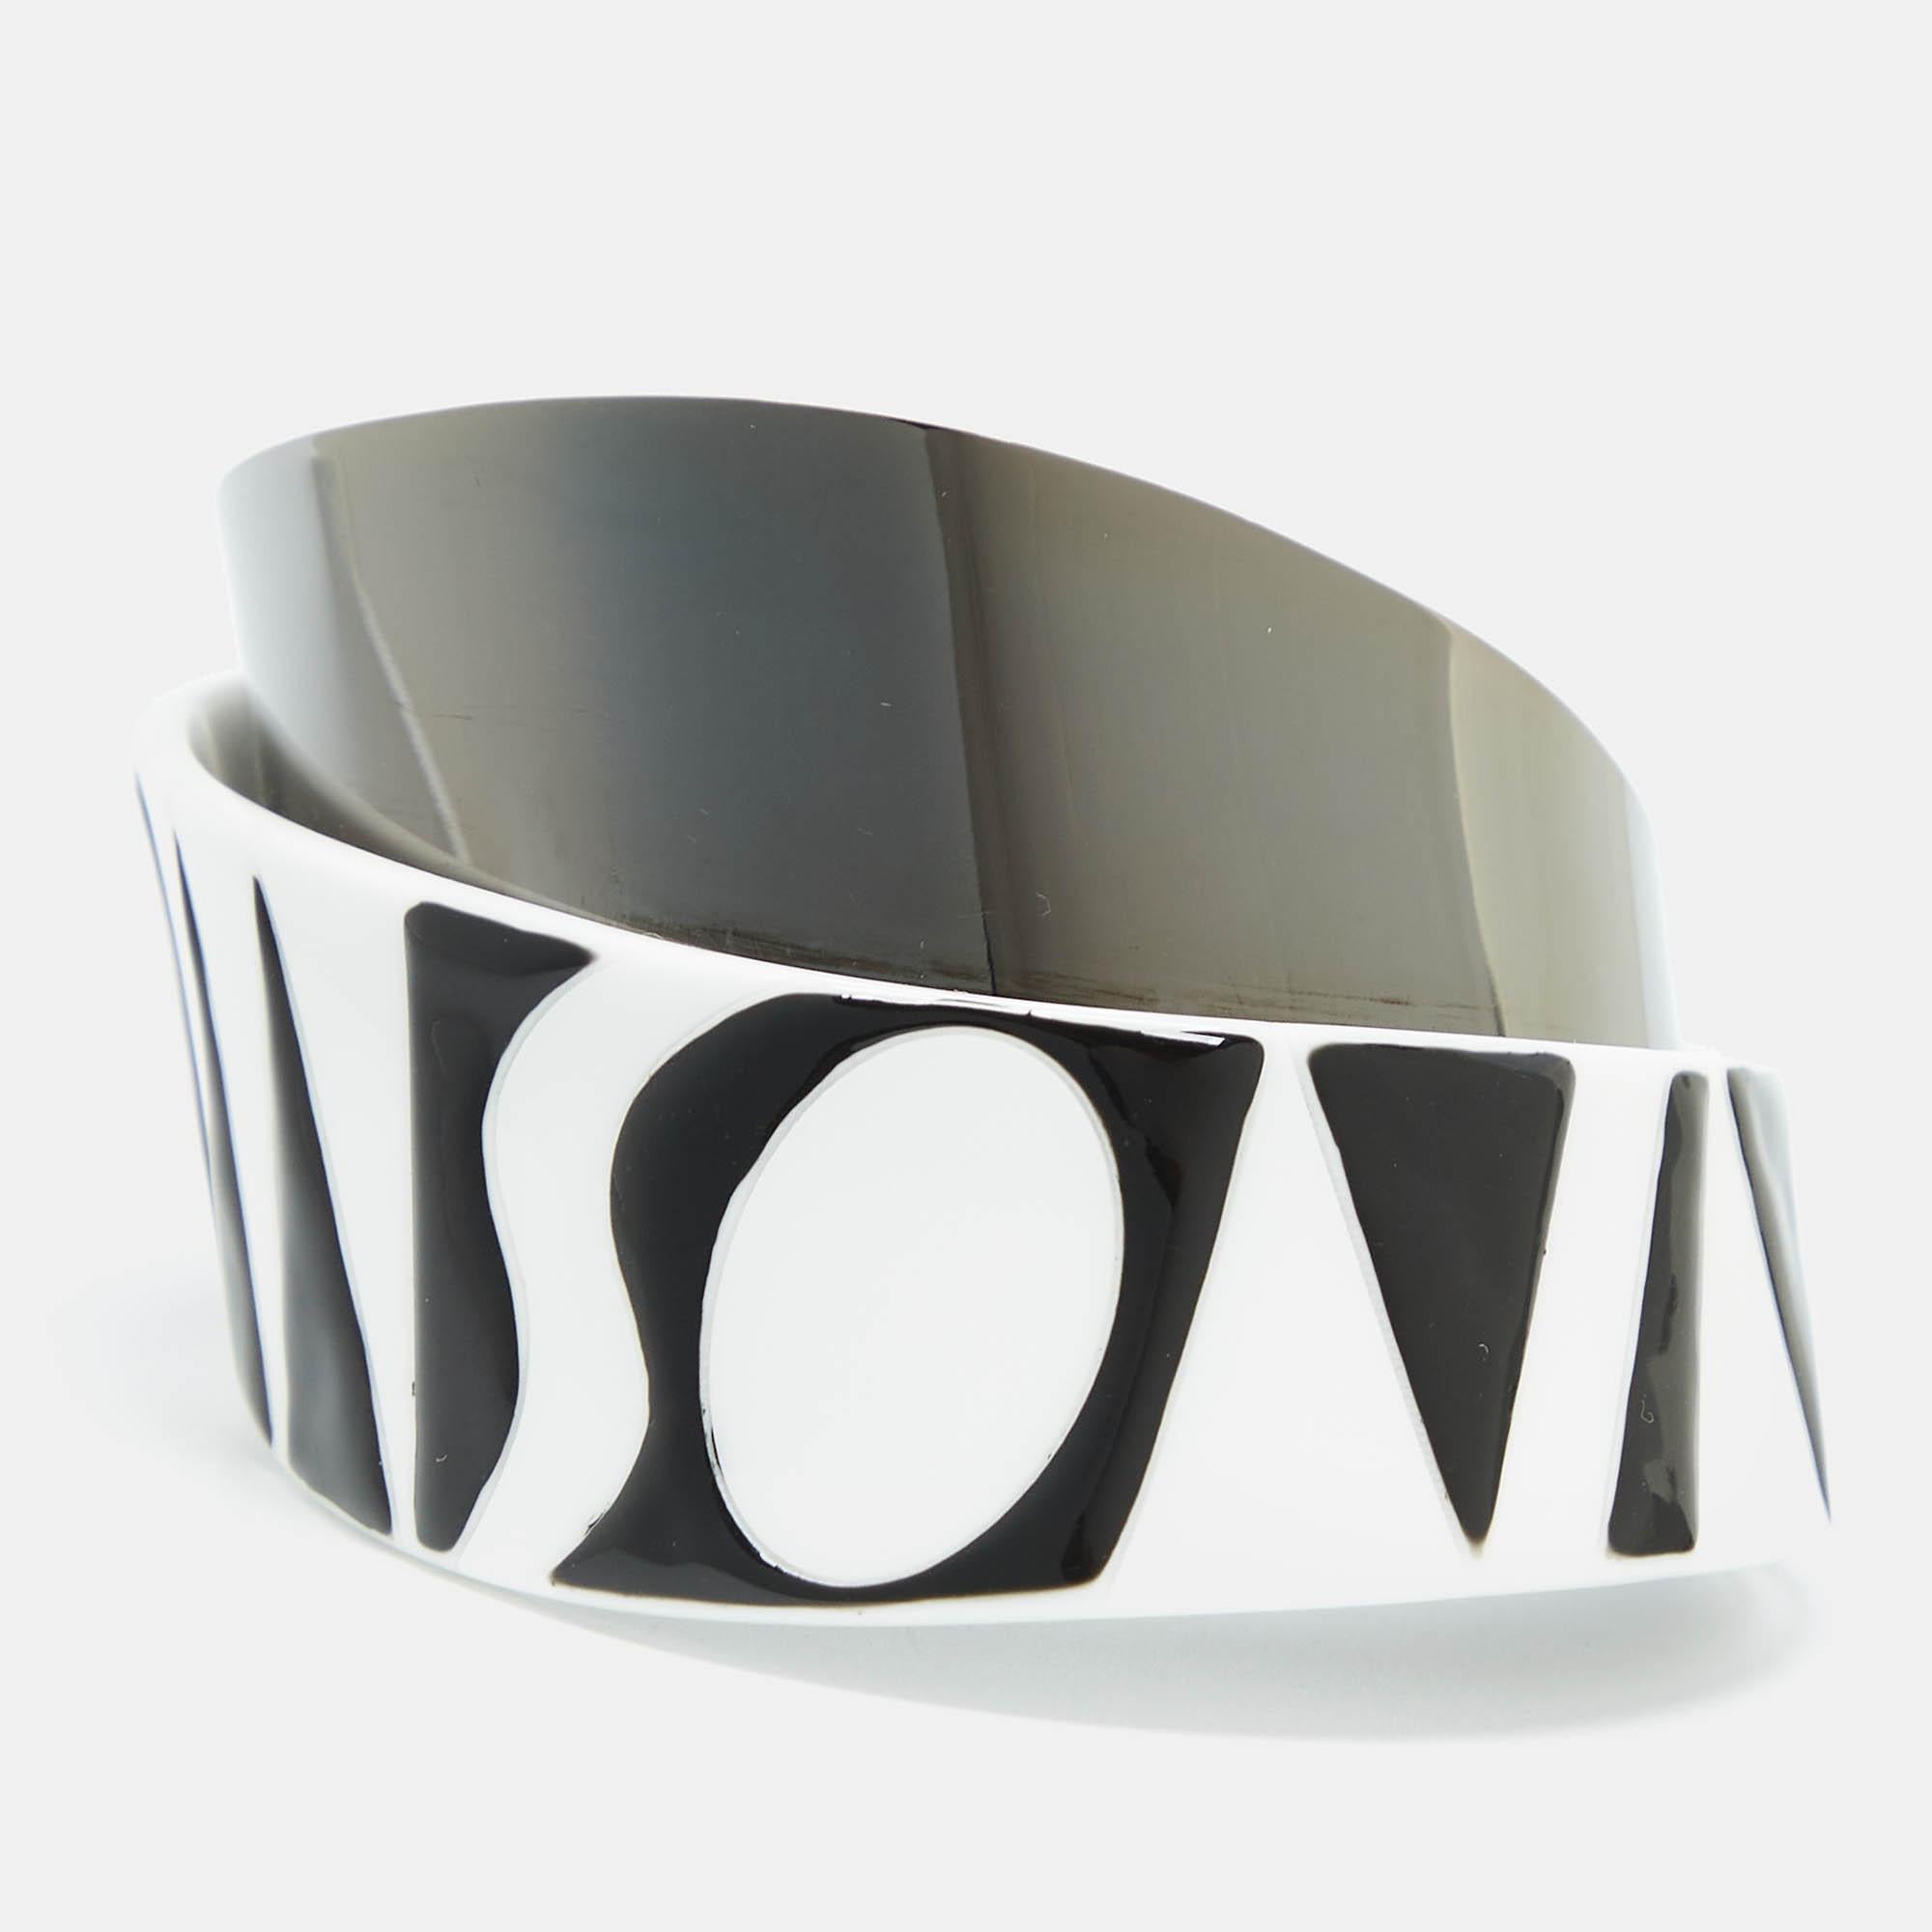 Aesthetic Movement Missoni Monochrome Logo Resin Gunmetal Tone Cuff Bracelet For Sale